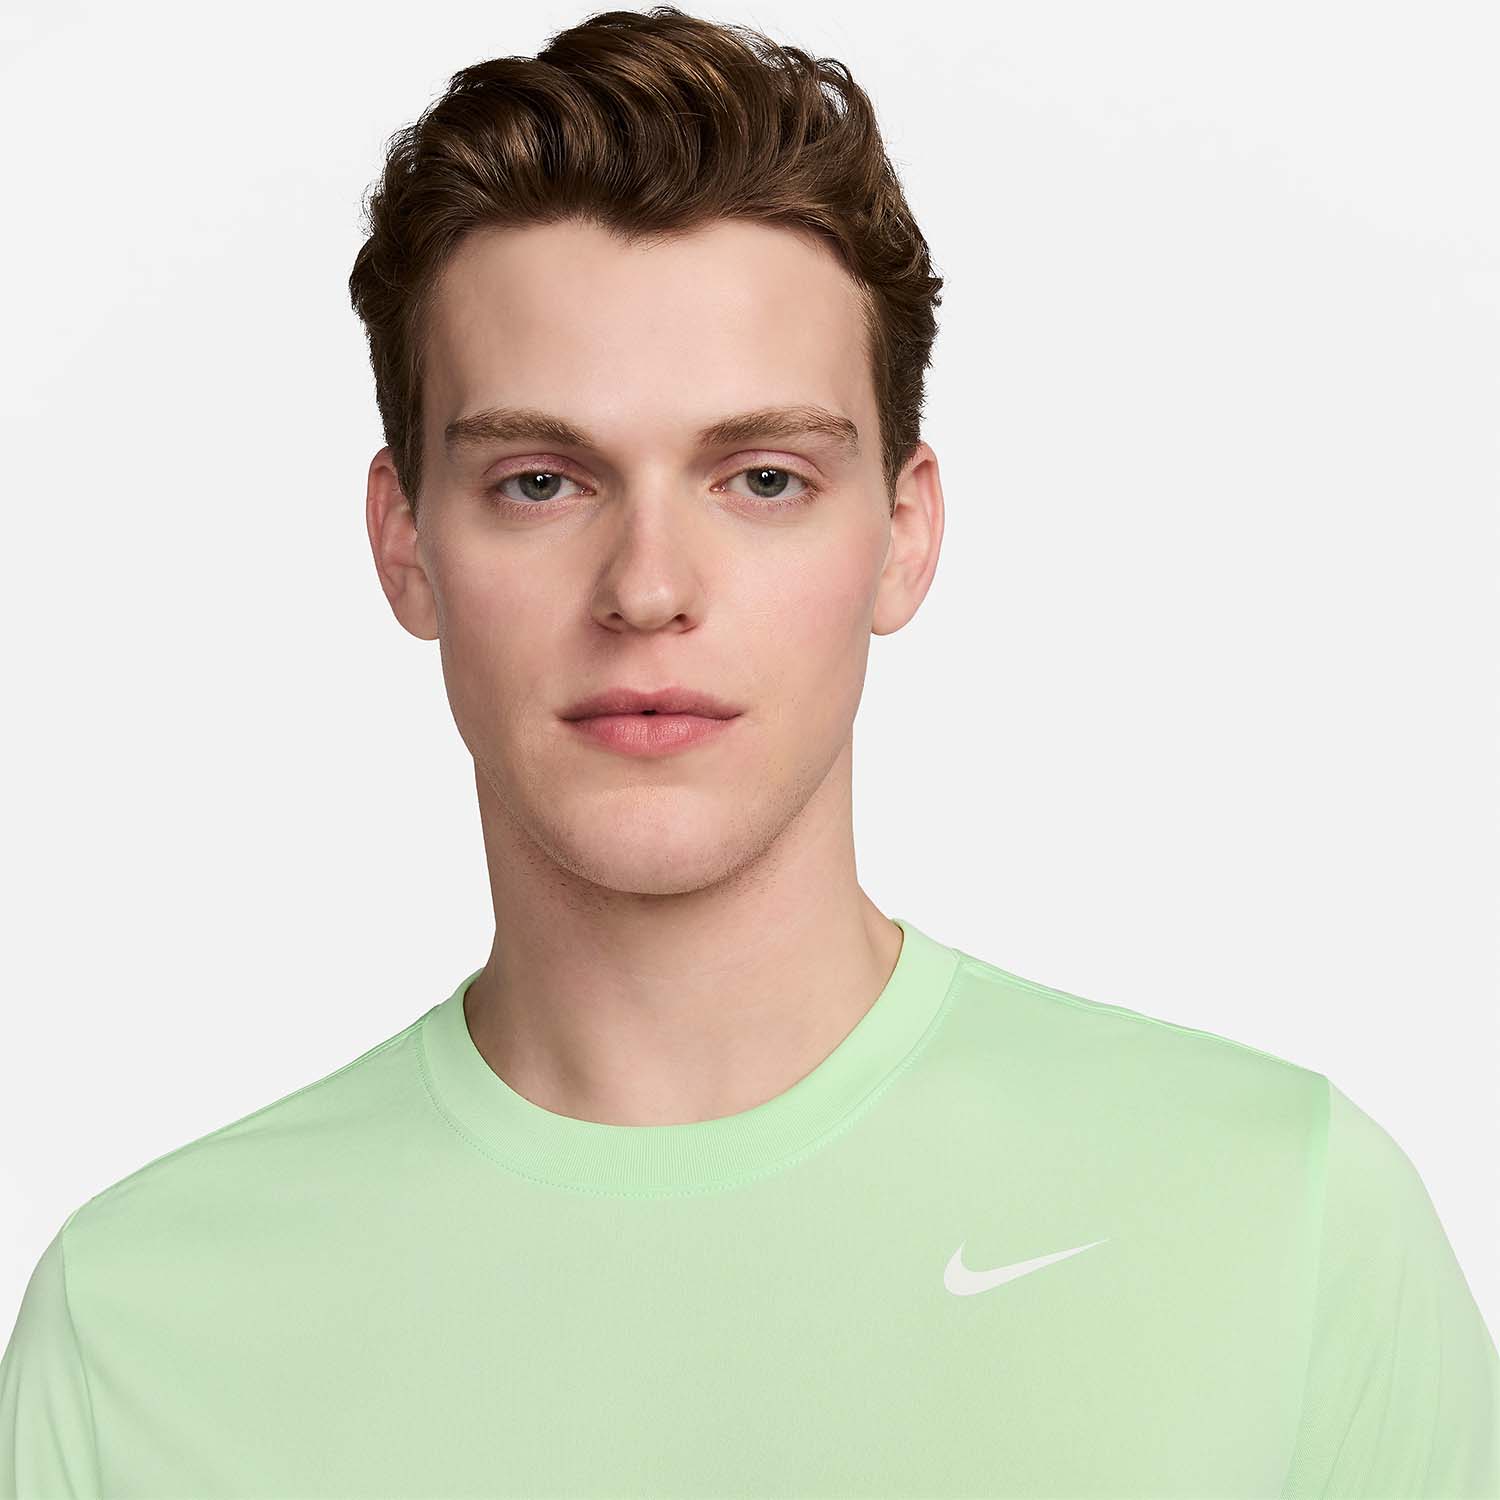 Nike Dri-FIT Legend T-Shirt - Vapor Green/White